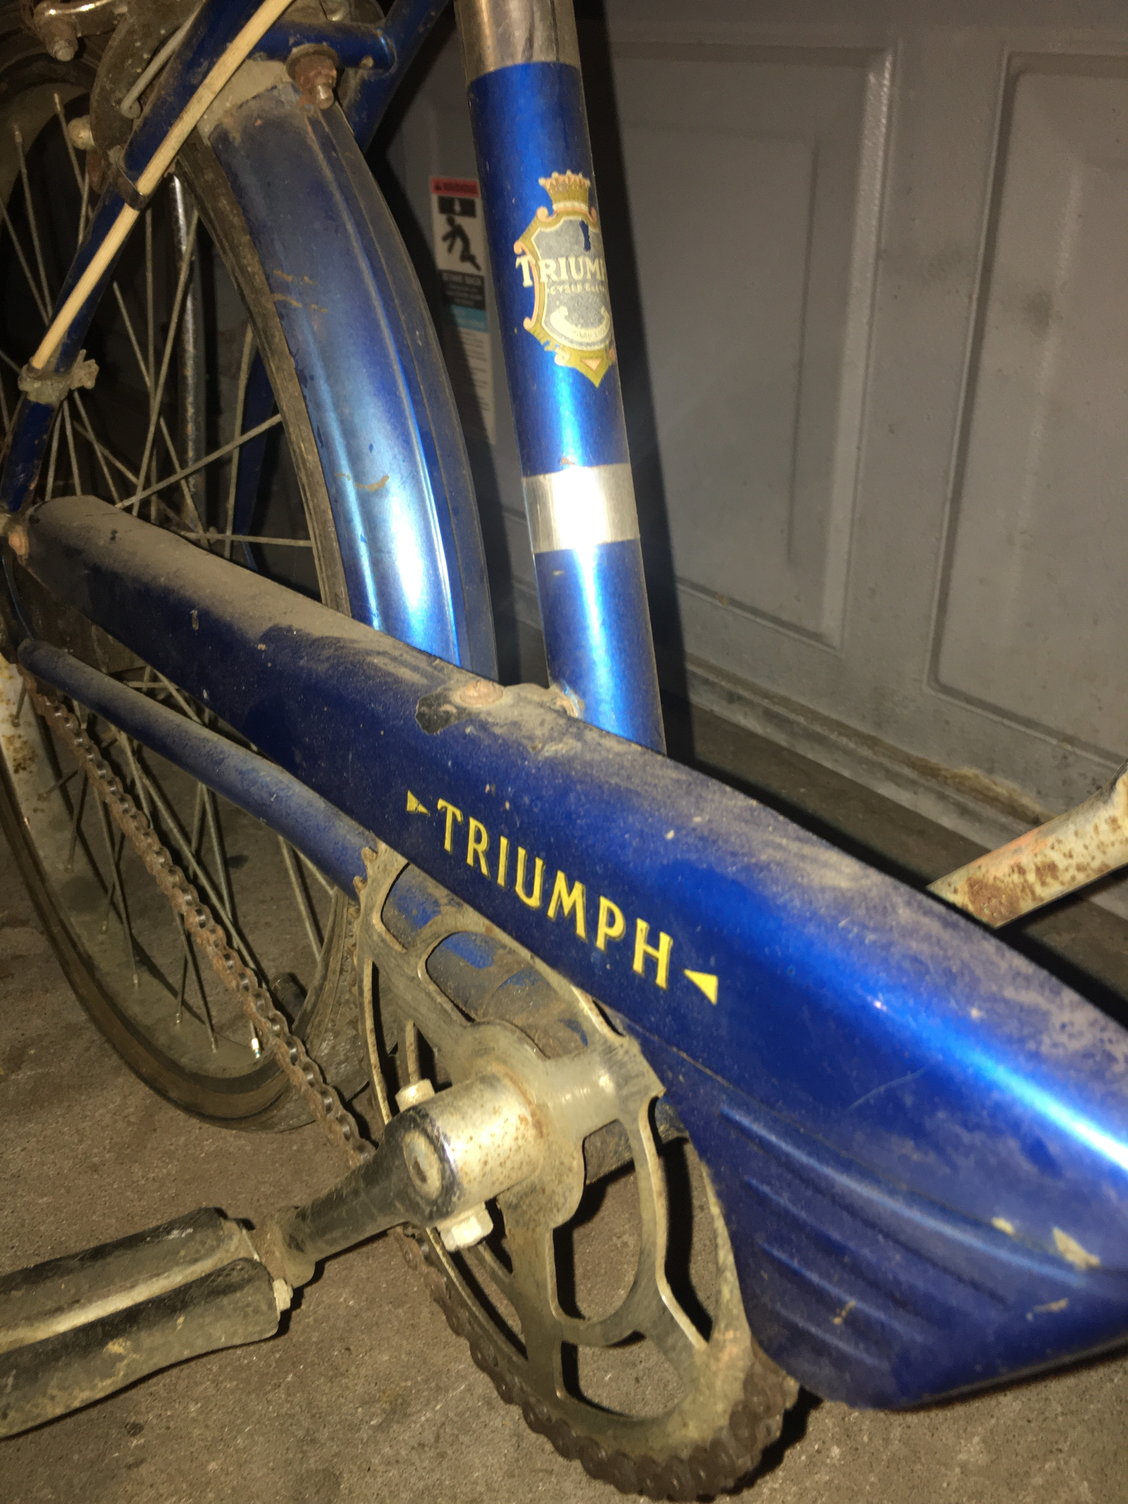 hercules bikes serial numbers